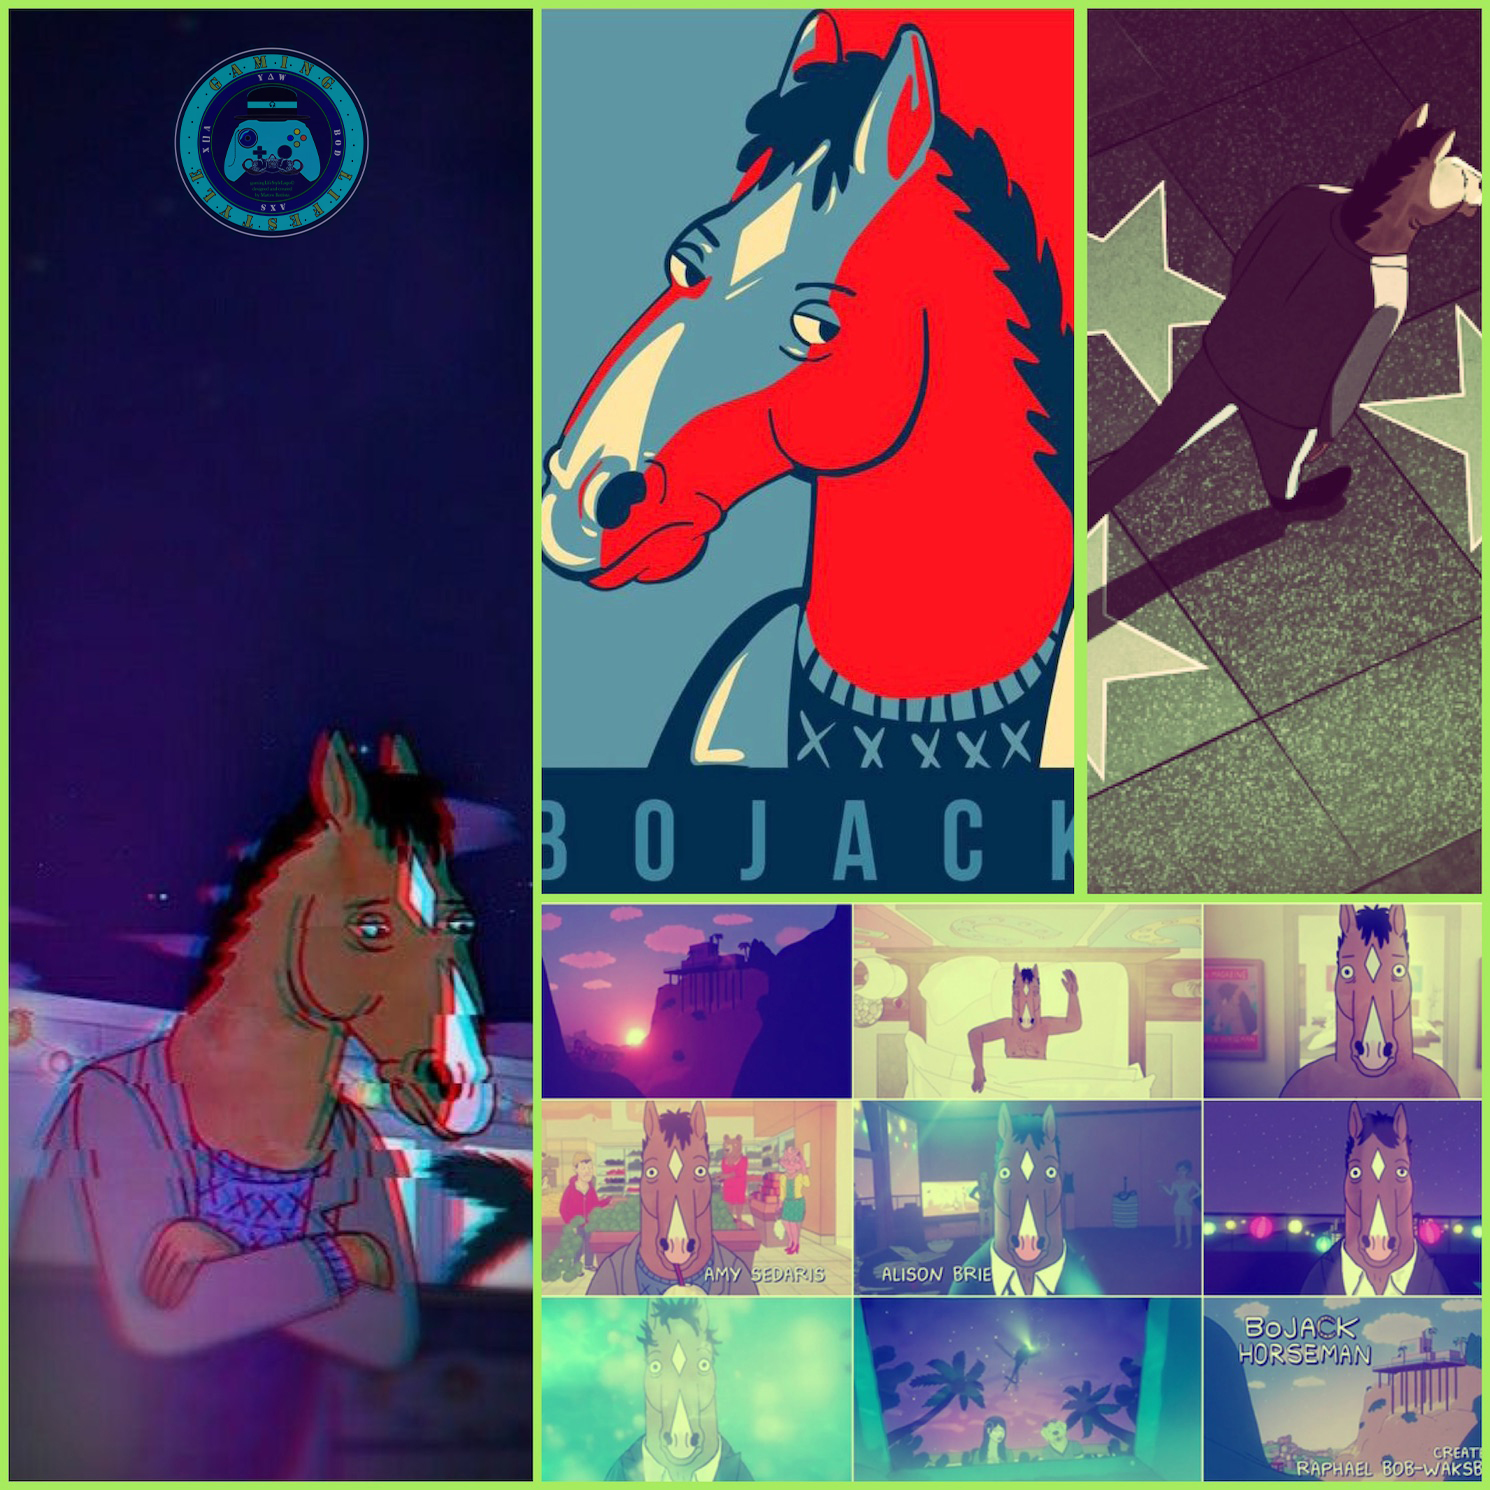 bojack-horseman-serie-animata-netflix-filosofia-considerazioni-riflessioni-insta-thoughts-cinema